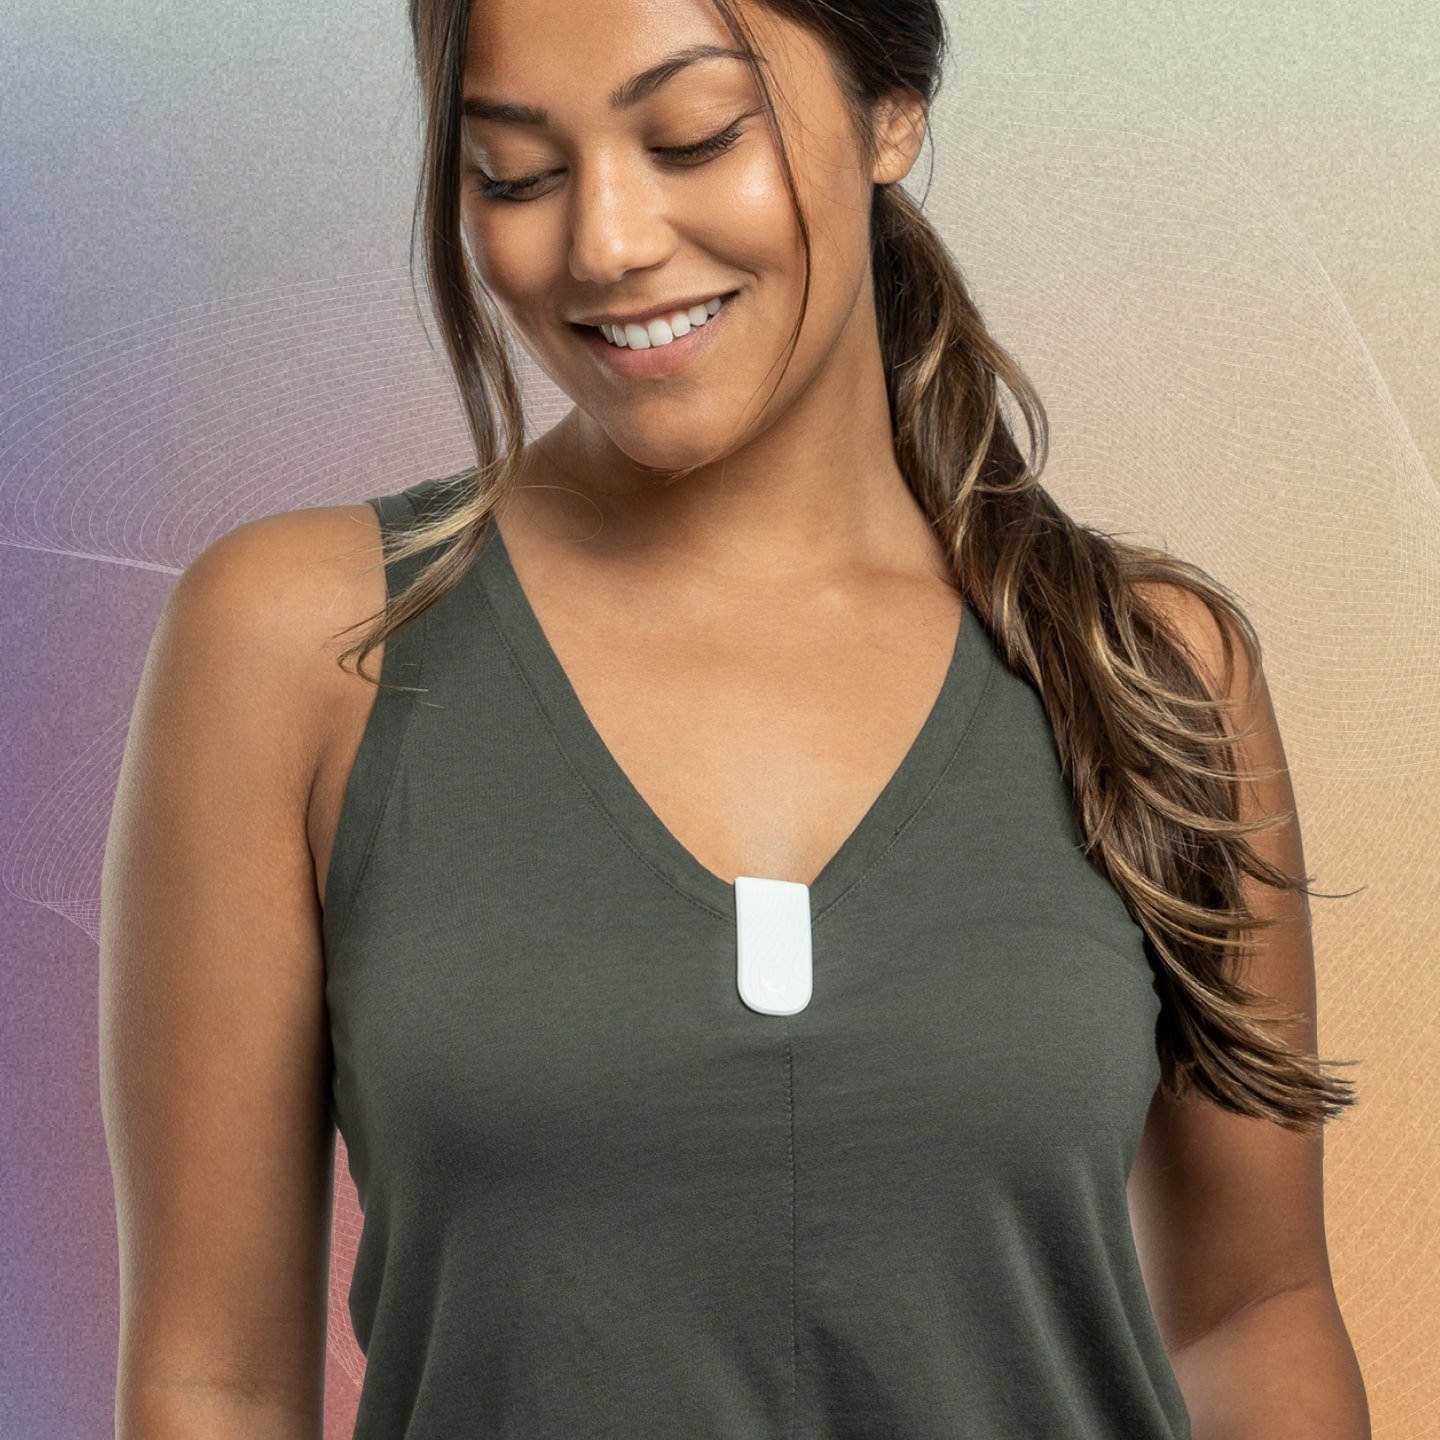 Female wearing Apollo Clip on shirt